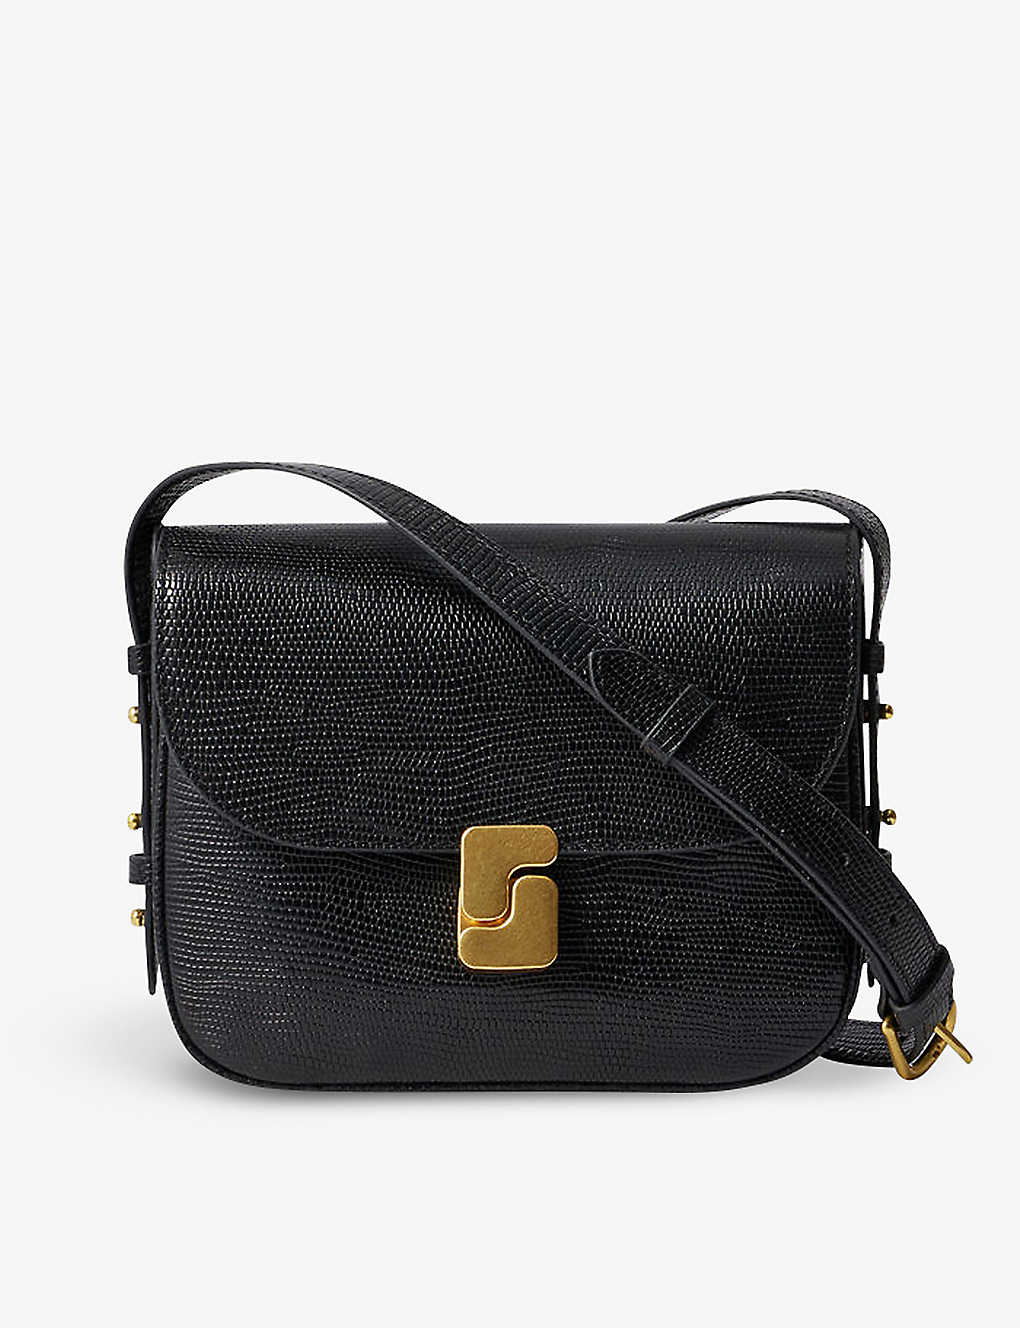 Soeur Womens Black Bellissima Mini Leather Shoulder Bag